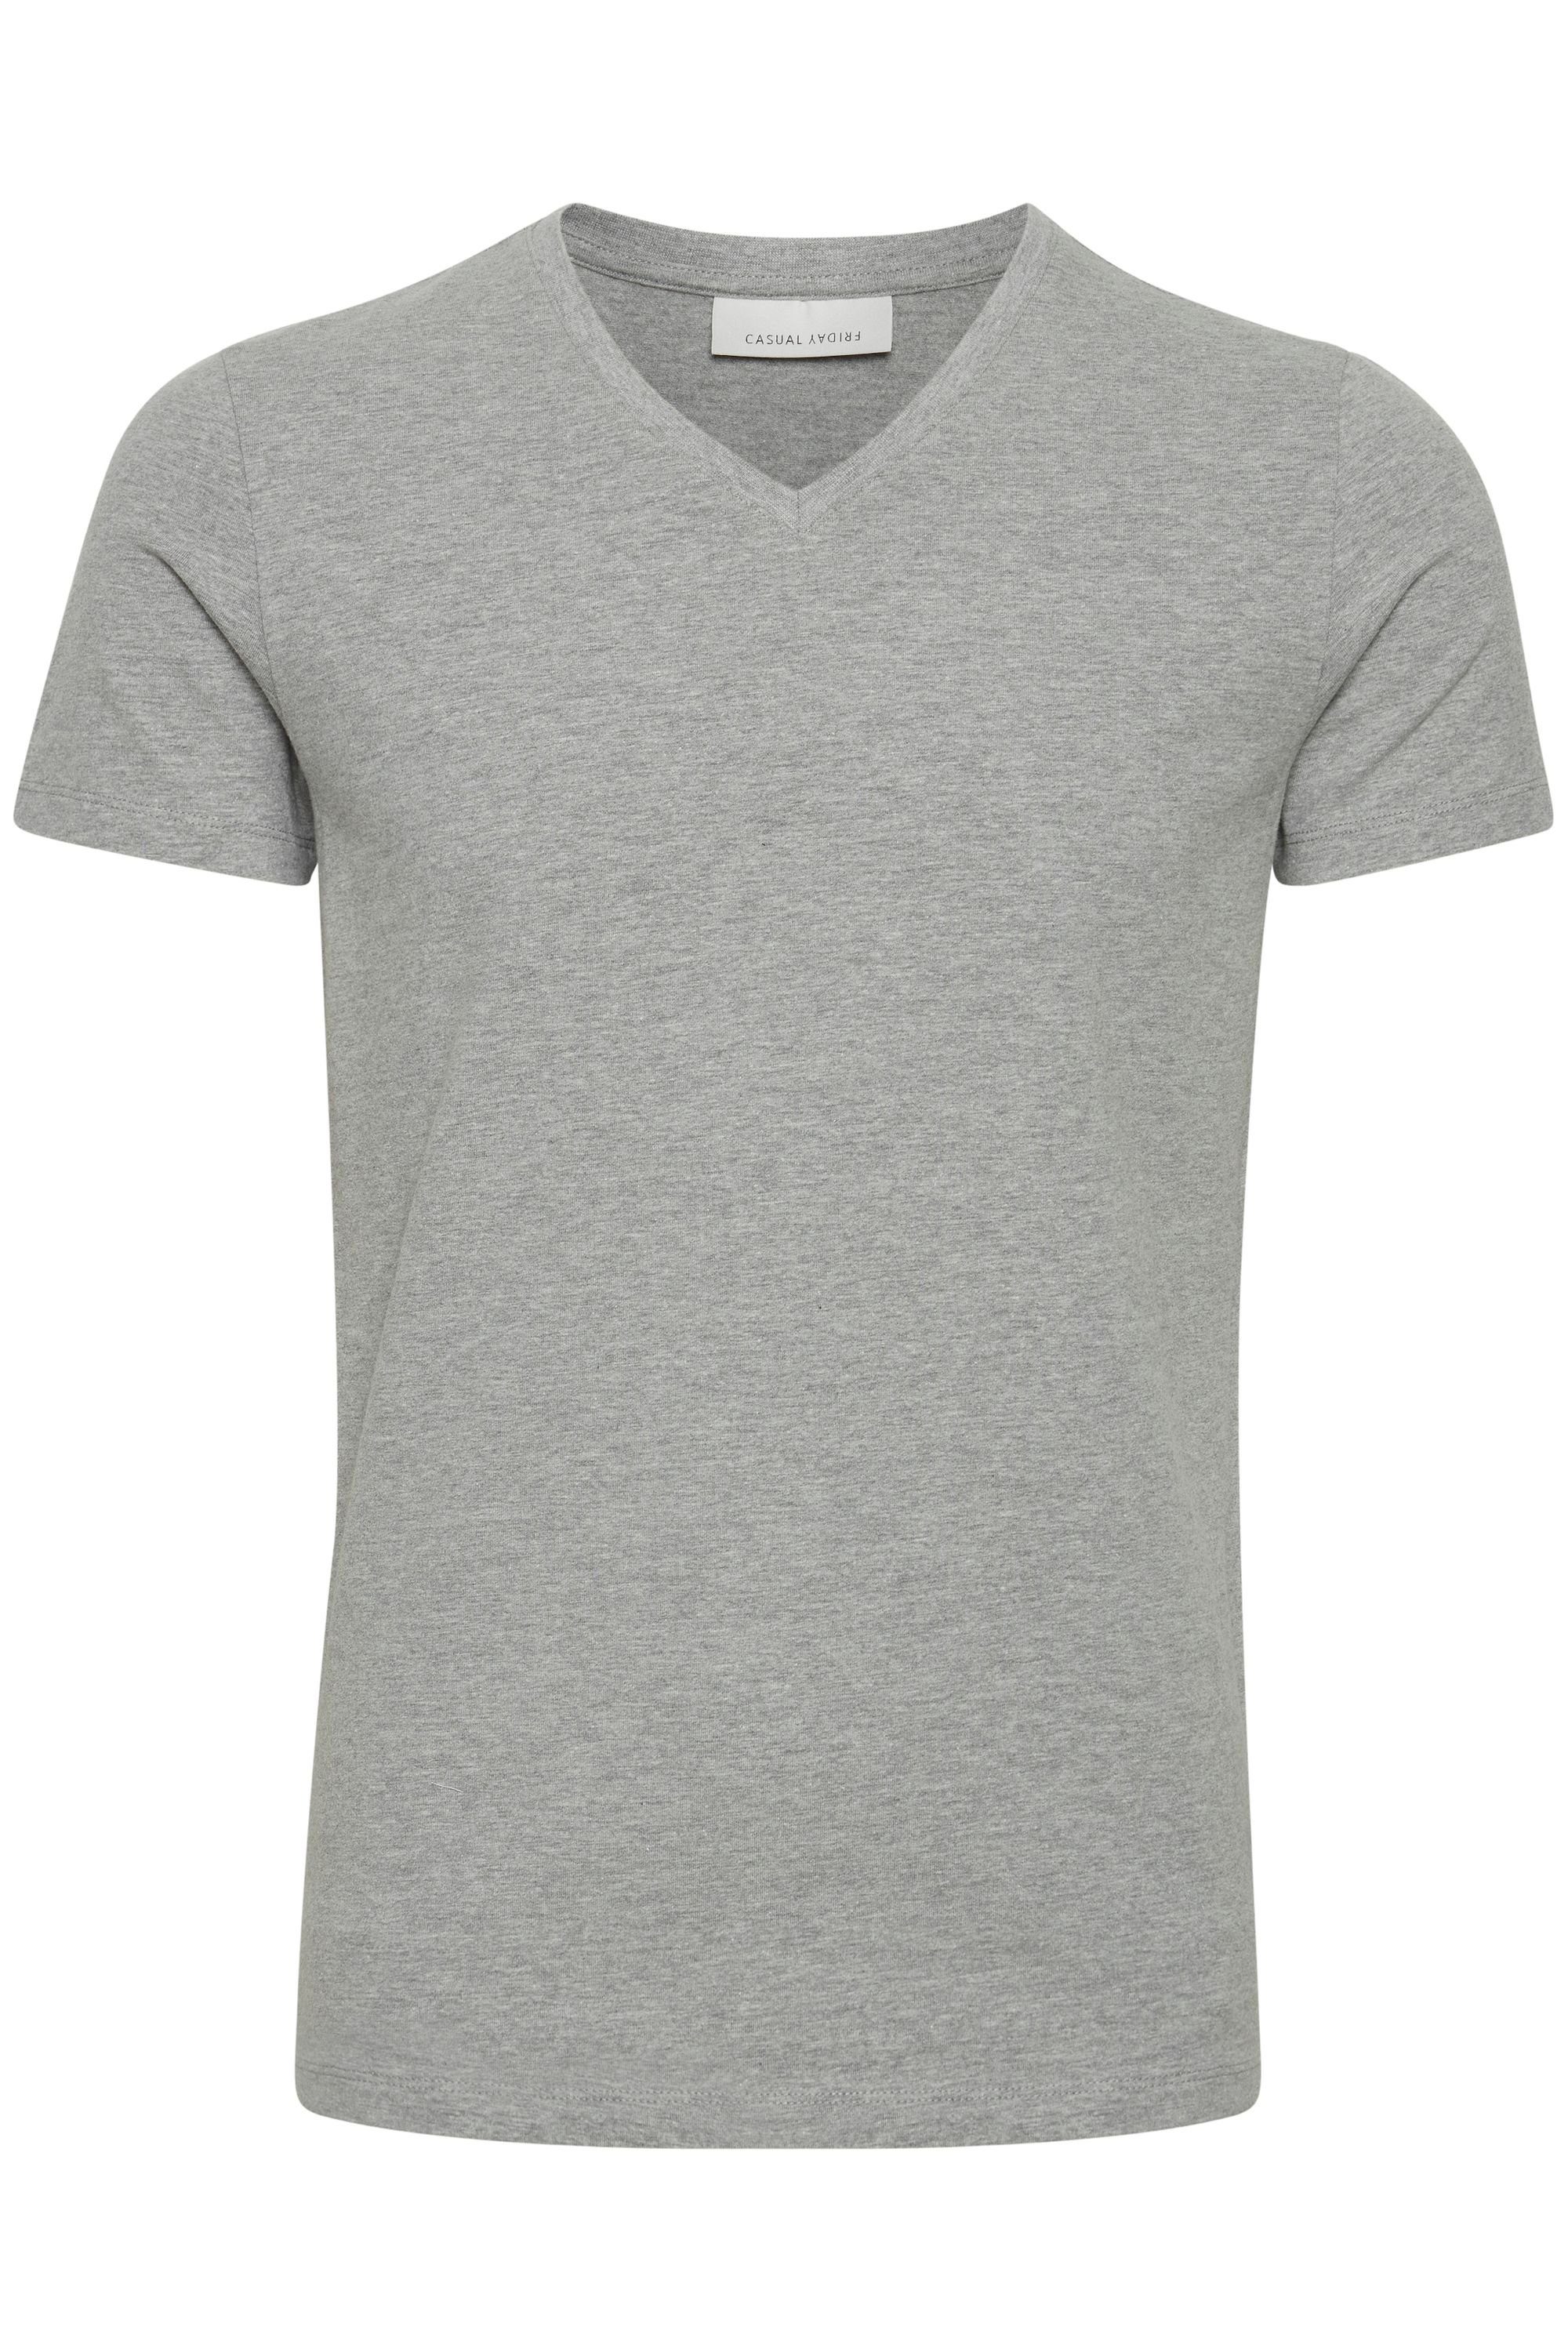 grey Friday - melange Light 20503062 T-Shirt (50813) CFLincoln Casual